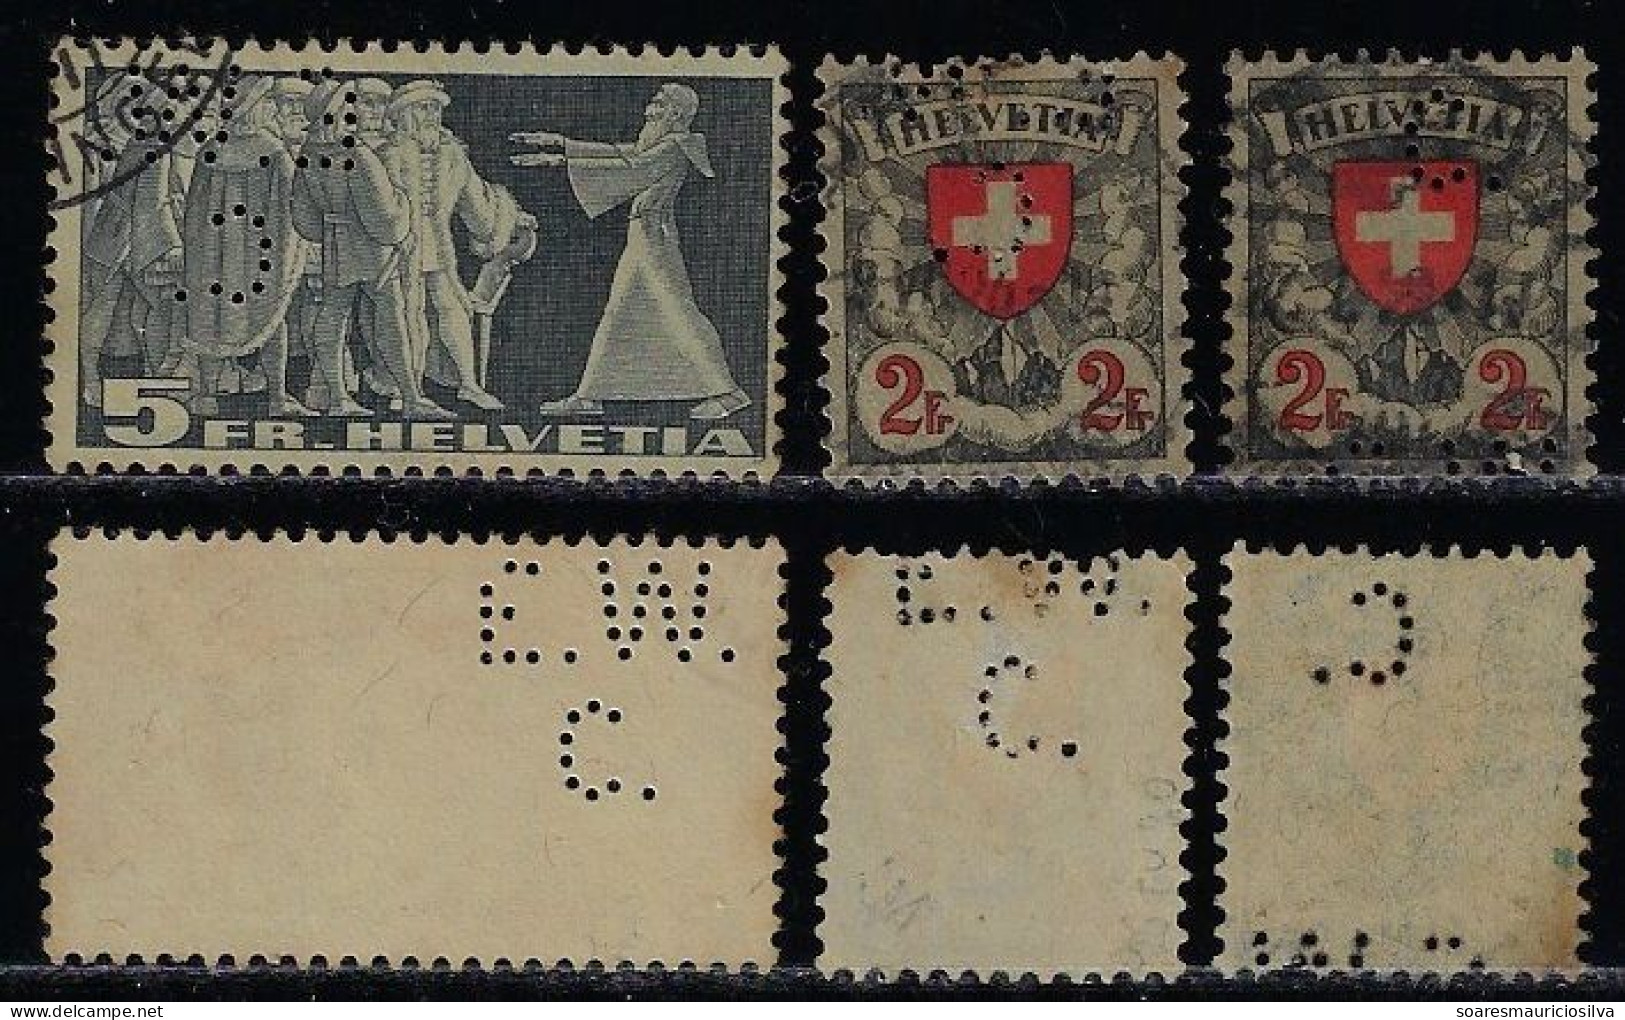 Switzerland 1894/1940 3 Stamp With Perfin E.W./C. By Escher-Wyss & Co Machine Factory In Zurich Lochung Perfore - Perfin